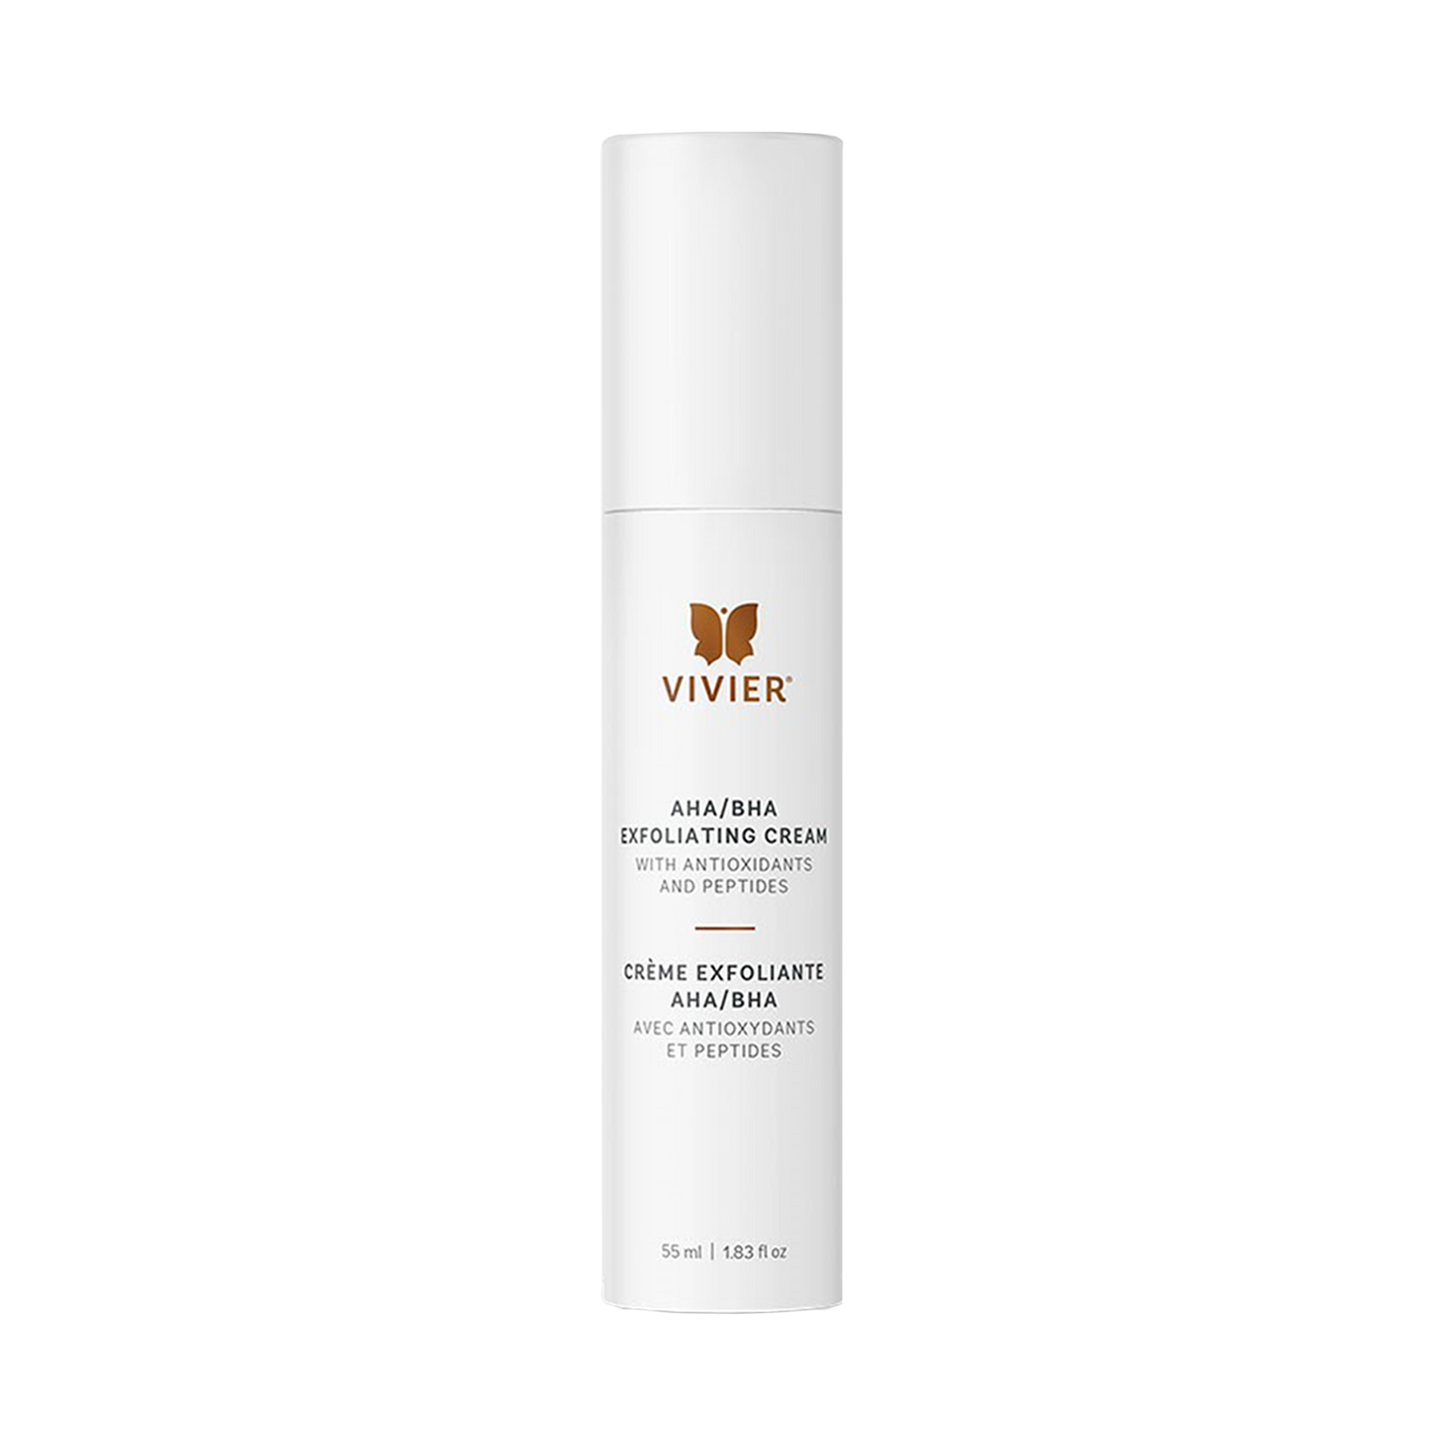 Vivier AHA/BHA Exfoliating Cream 55ml / 1.83fl oz